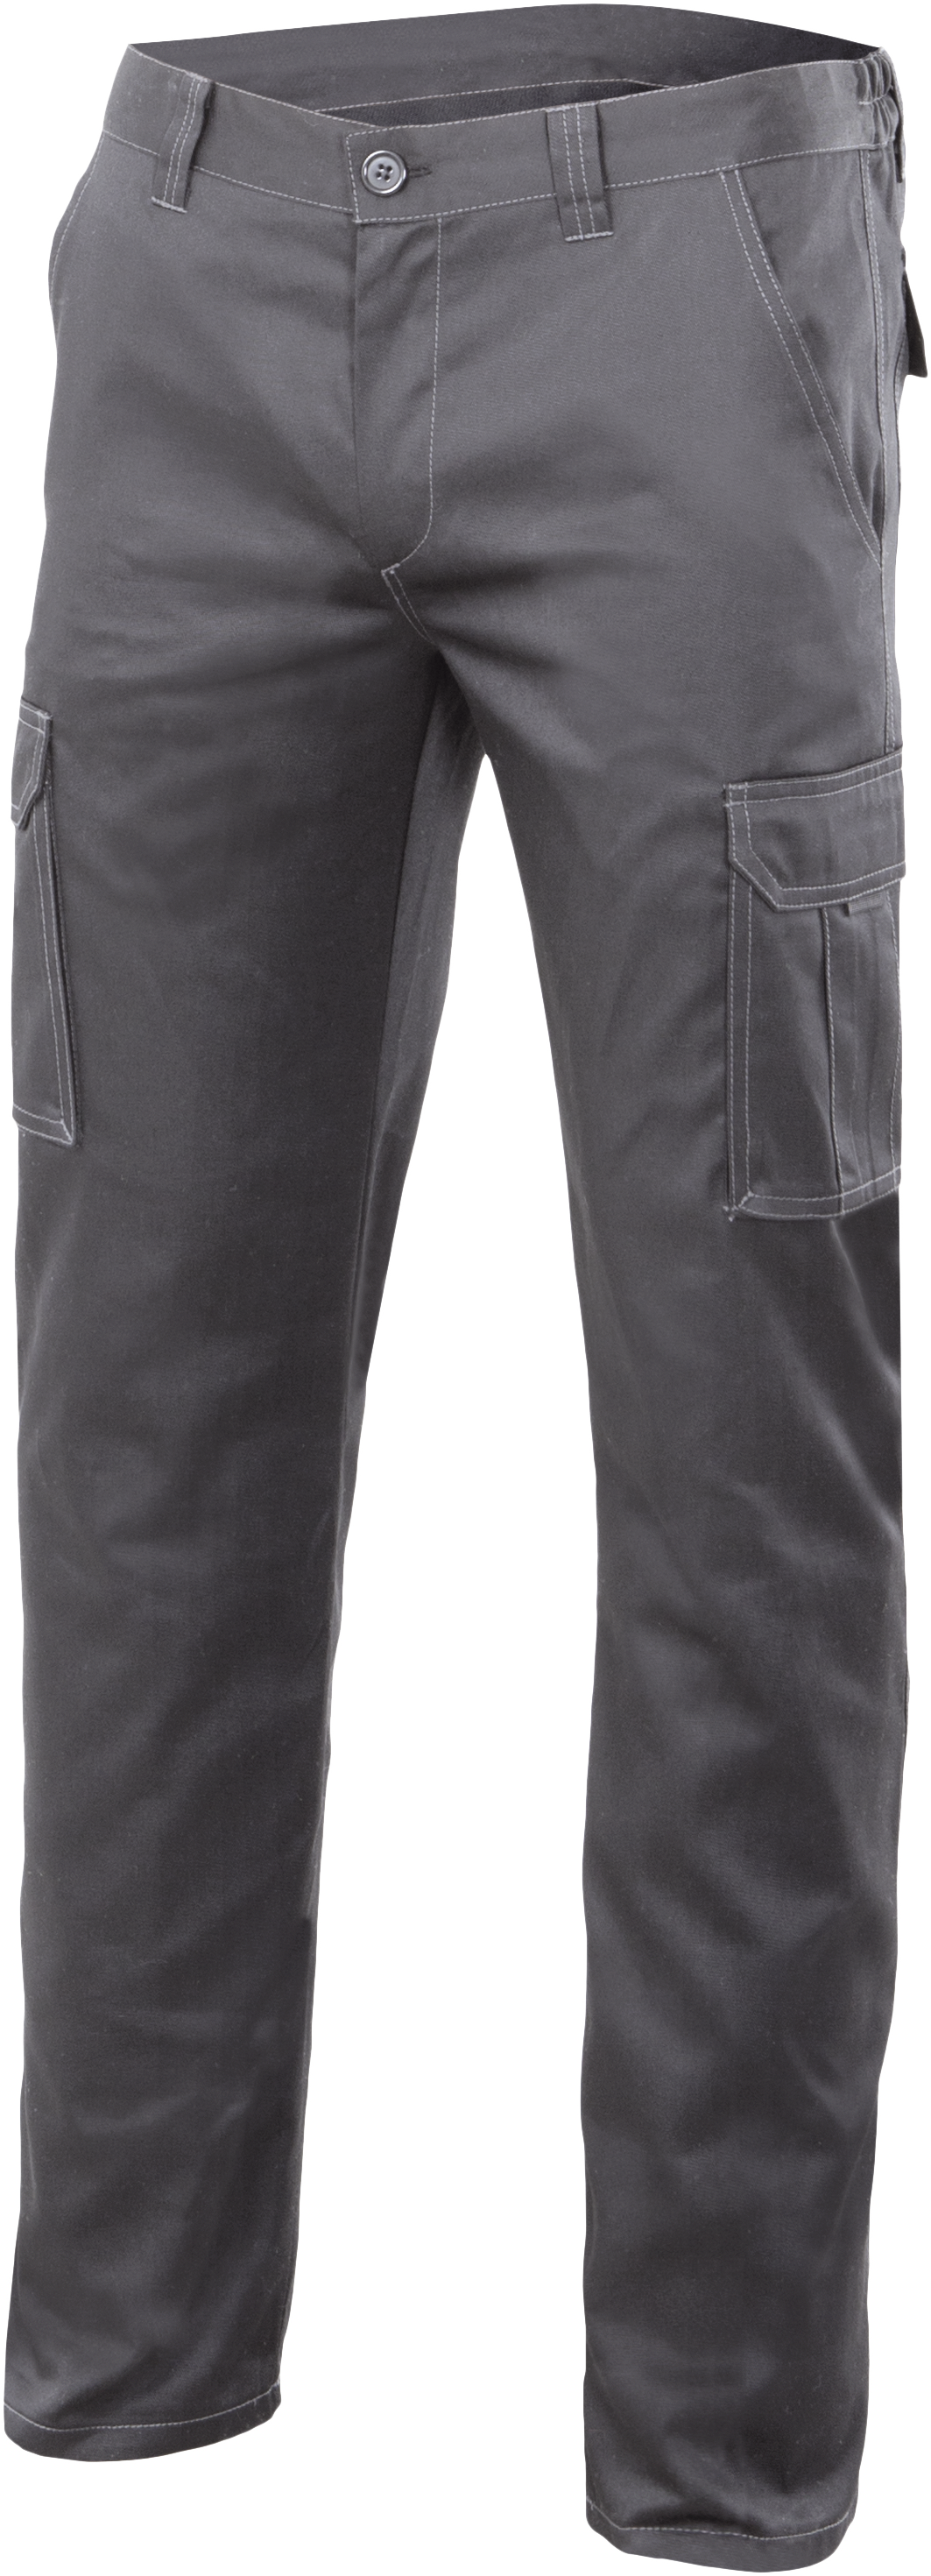 Pantalon gris 103002s tm